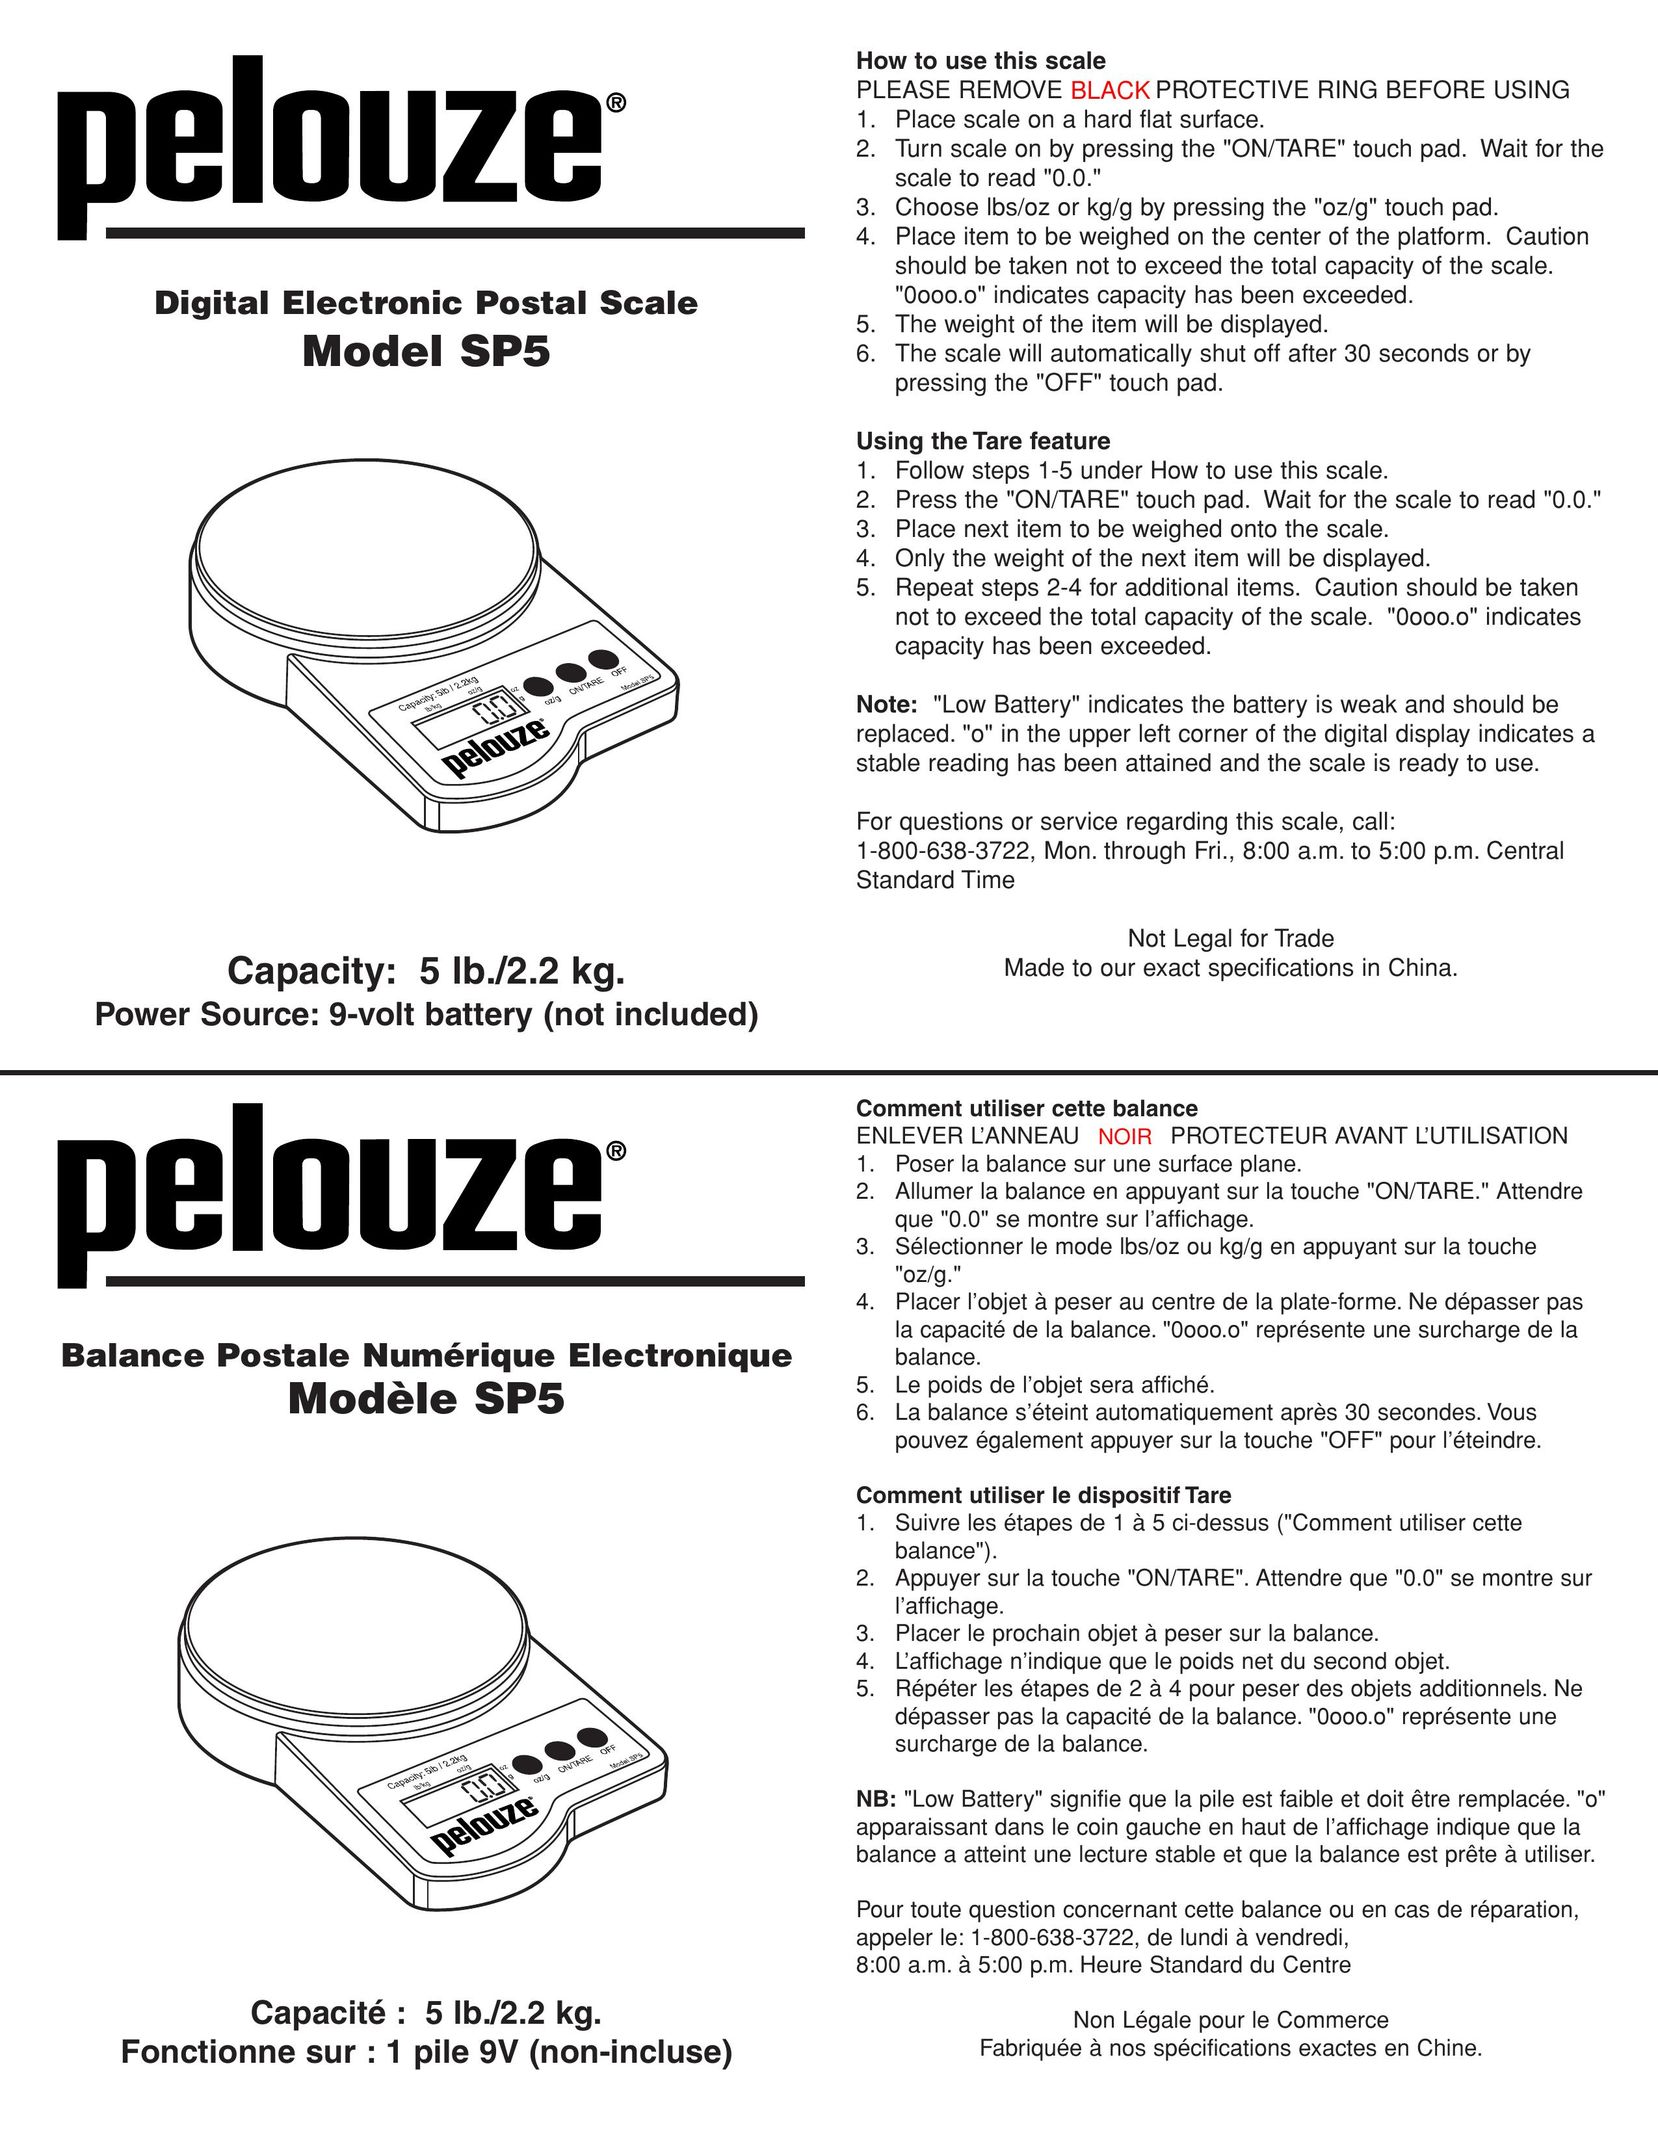 Dymo SP5 Postal Equipment User Manual